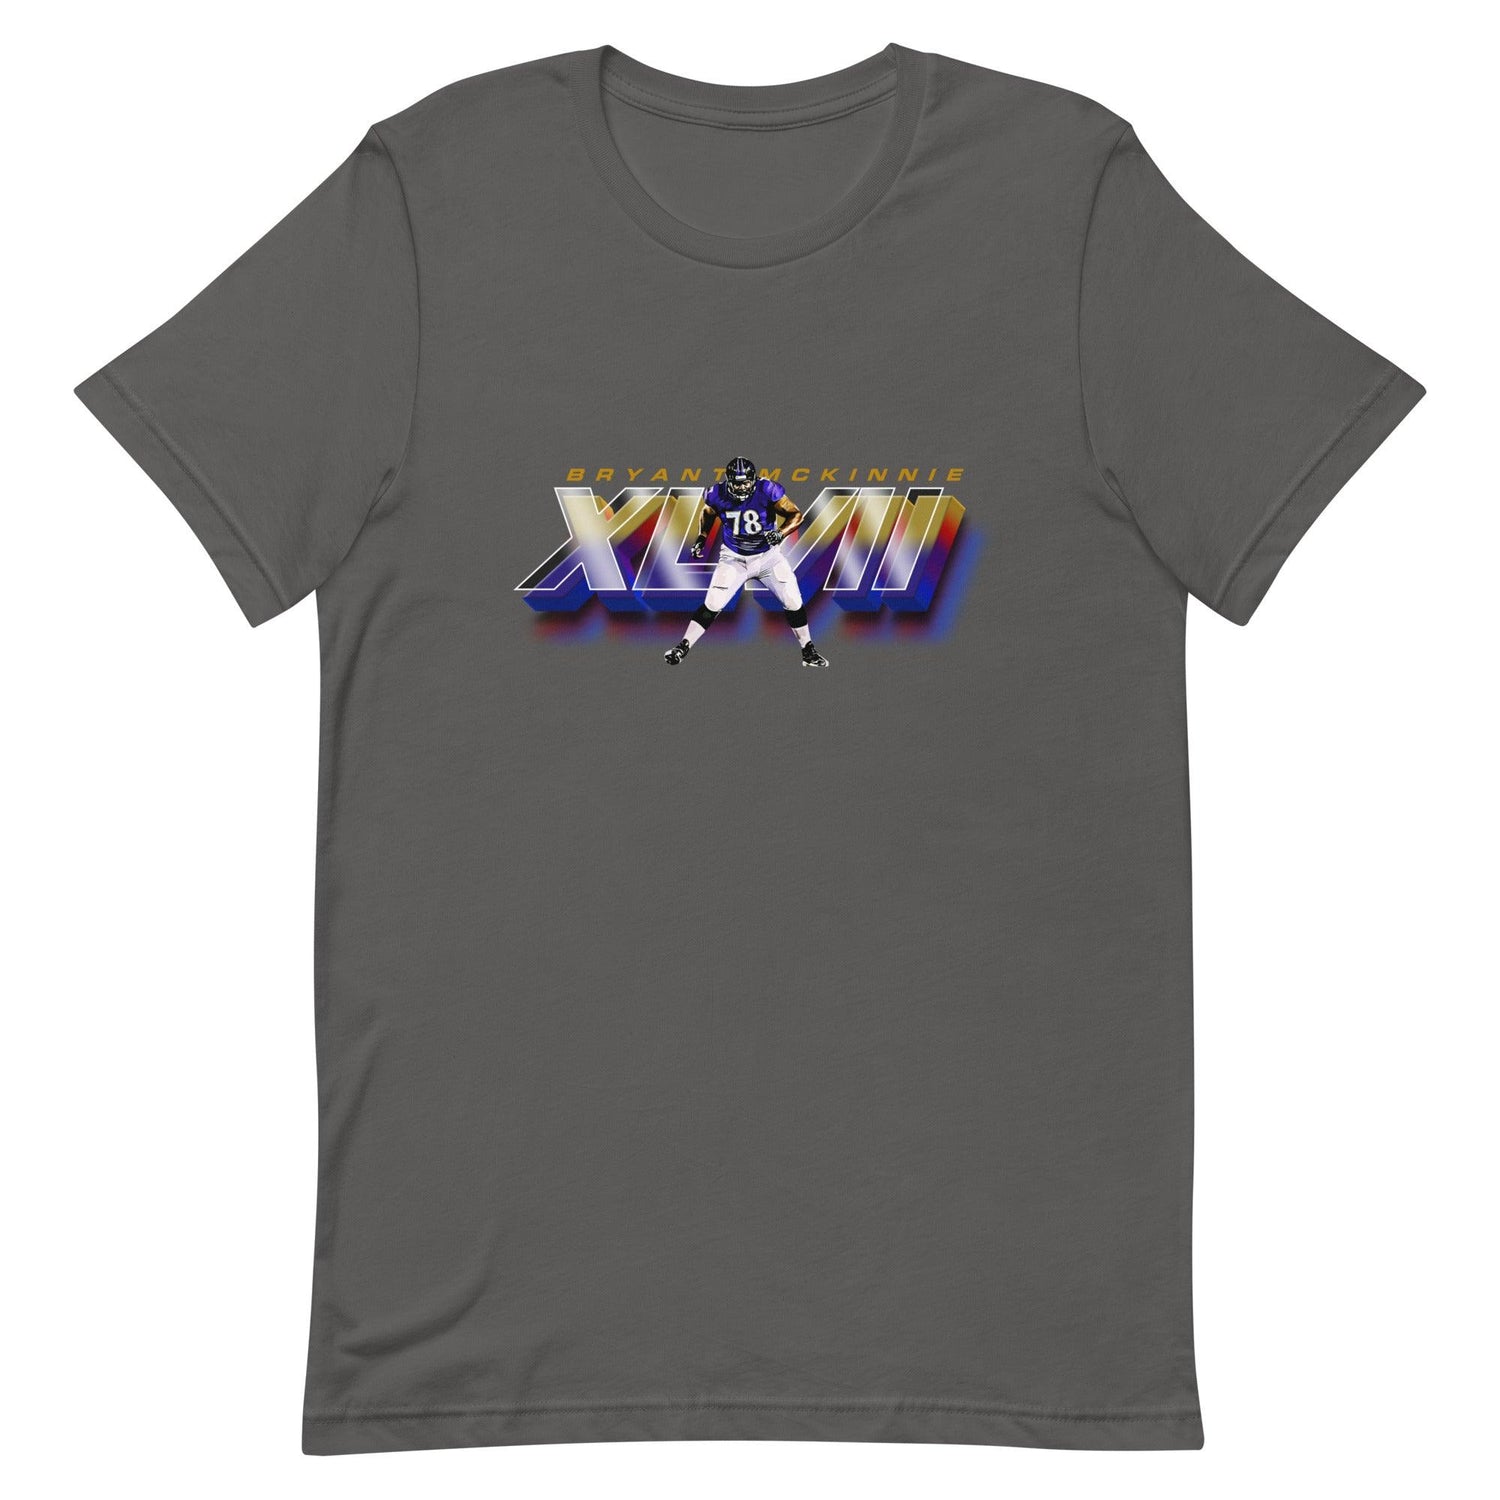 Bryant McKinnie "XLVII" t-shirt - Fan Arch